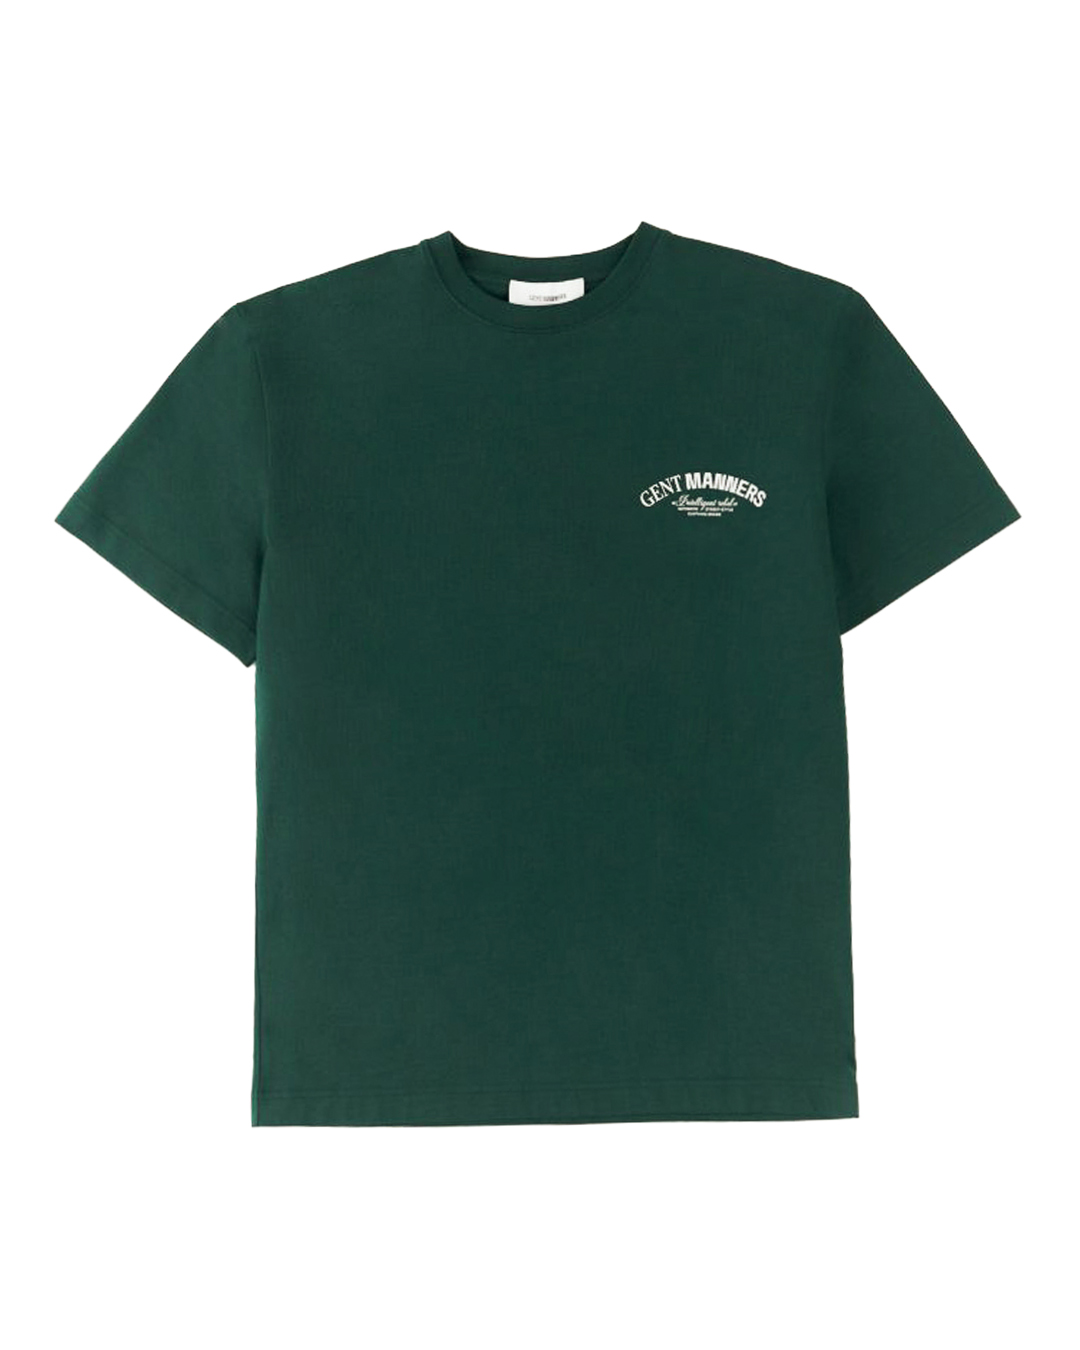 футболка Gent Manners 01_08T_GR зеленый 2xl, размер 2xl